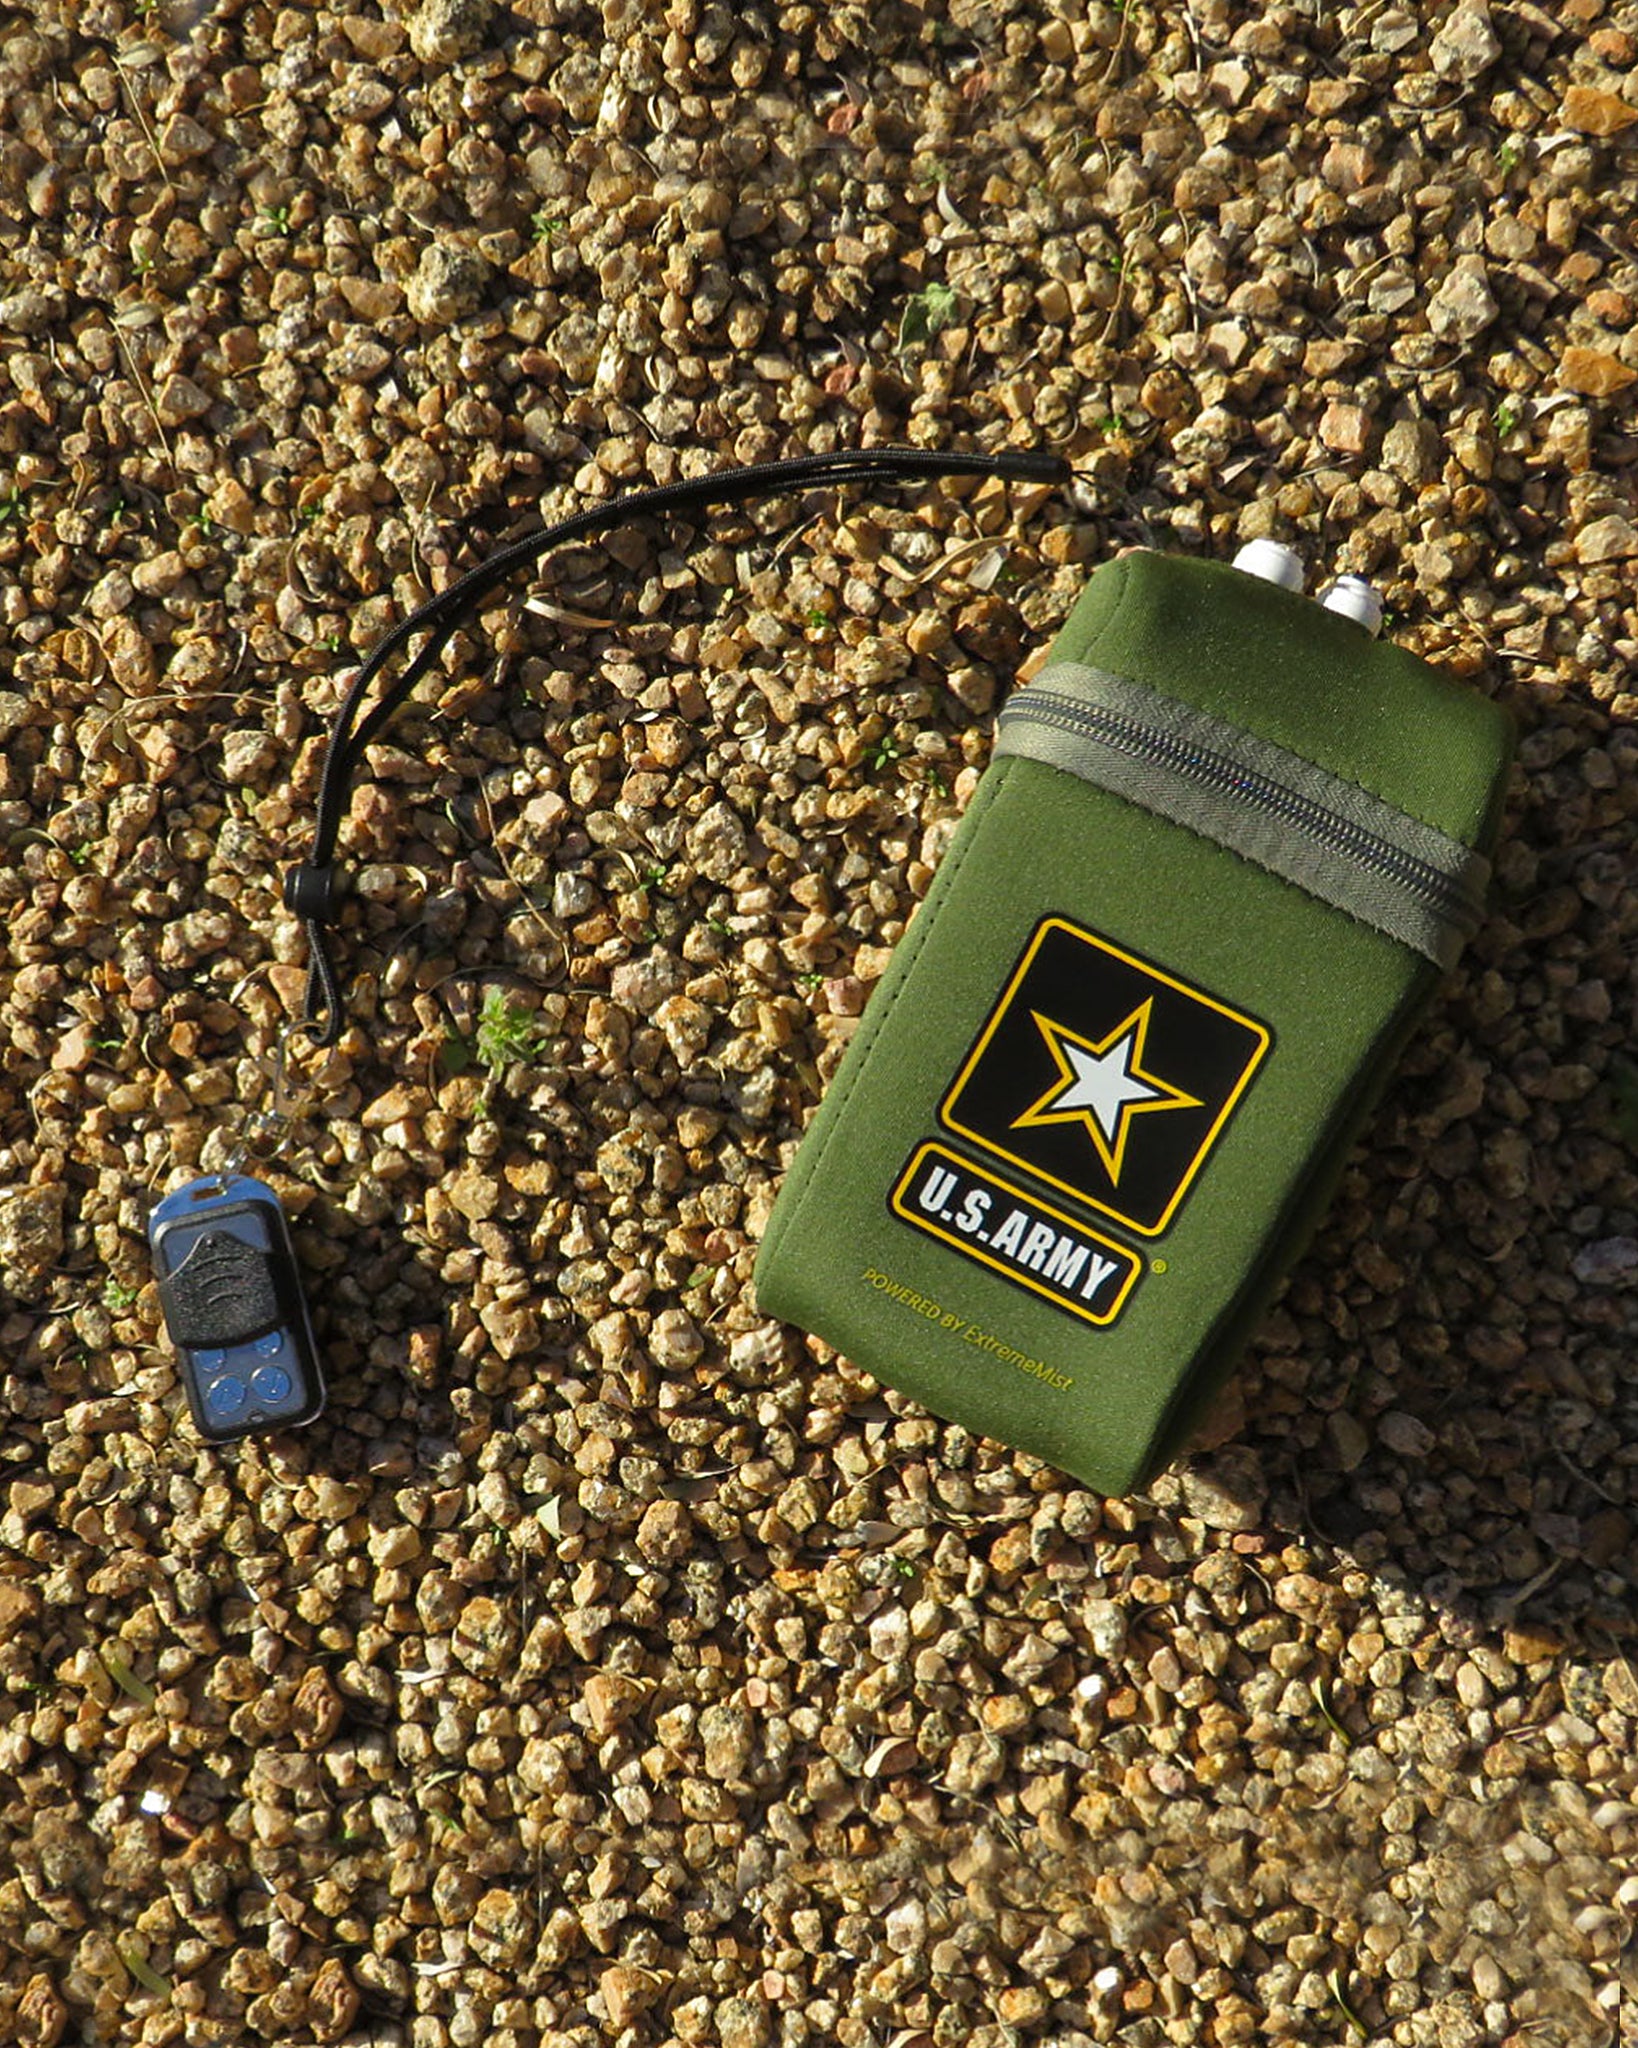 Army Edition: Portable Misting System (Quad Kit) w/ Storage Box